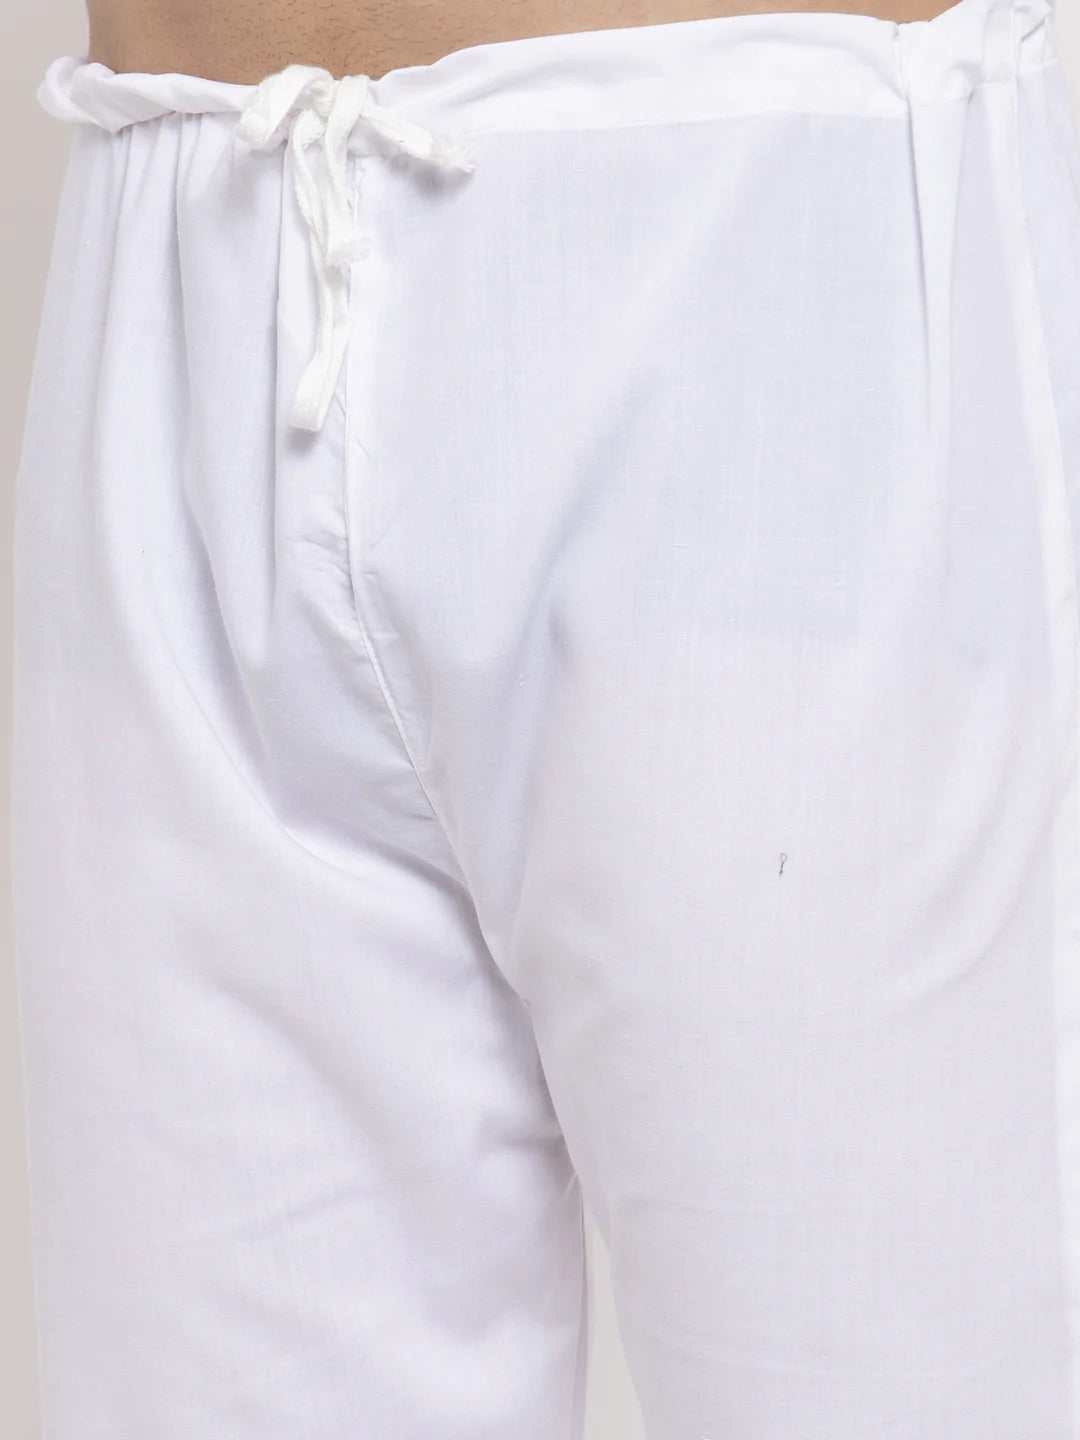 Jompers Men's Brown Cotton Solid Kurta Payjama Sets ( JOKP 611 Brown )